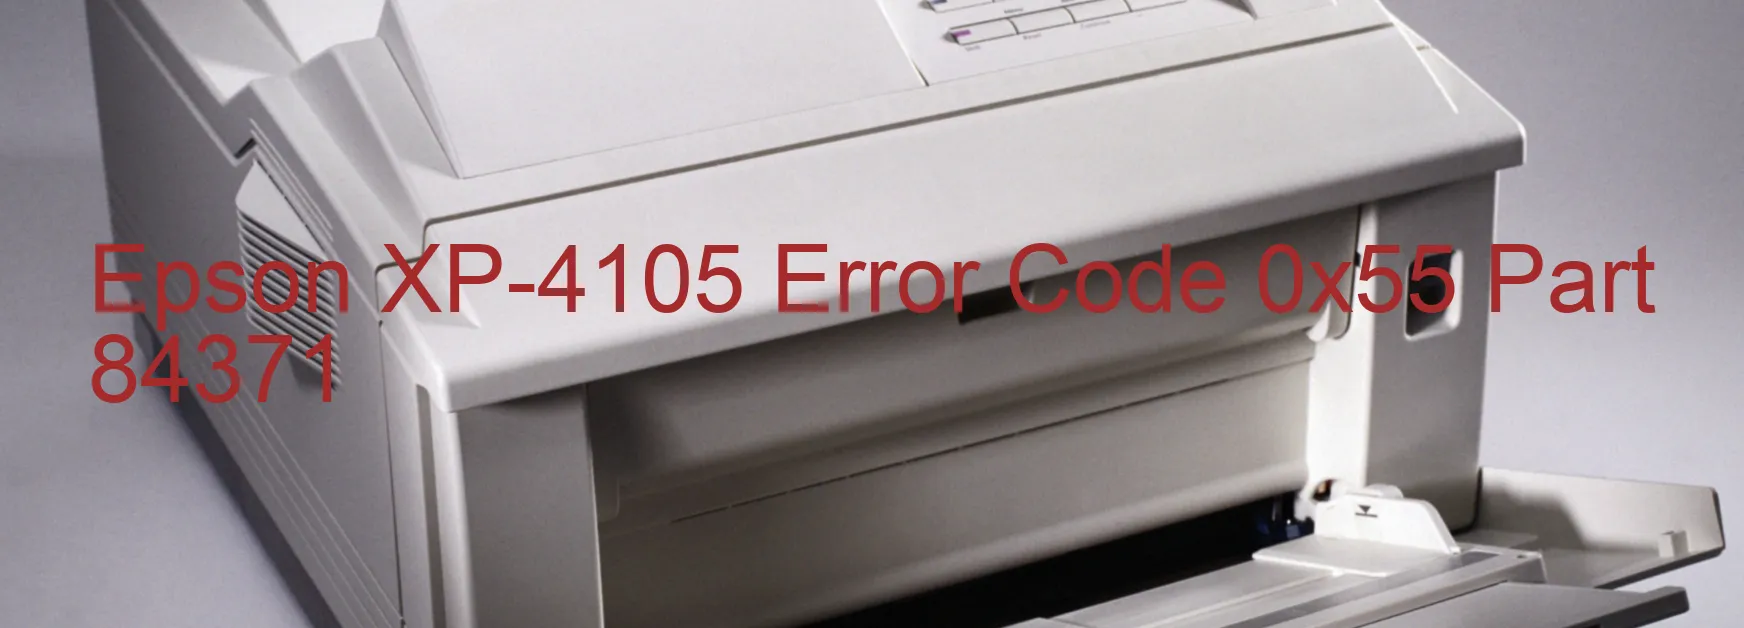 Epson XP-4105 Error 0x55